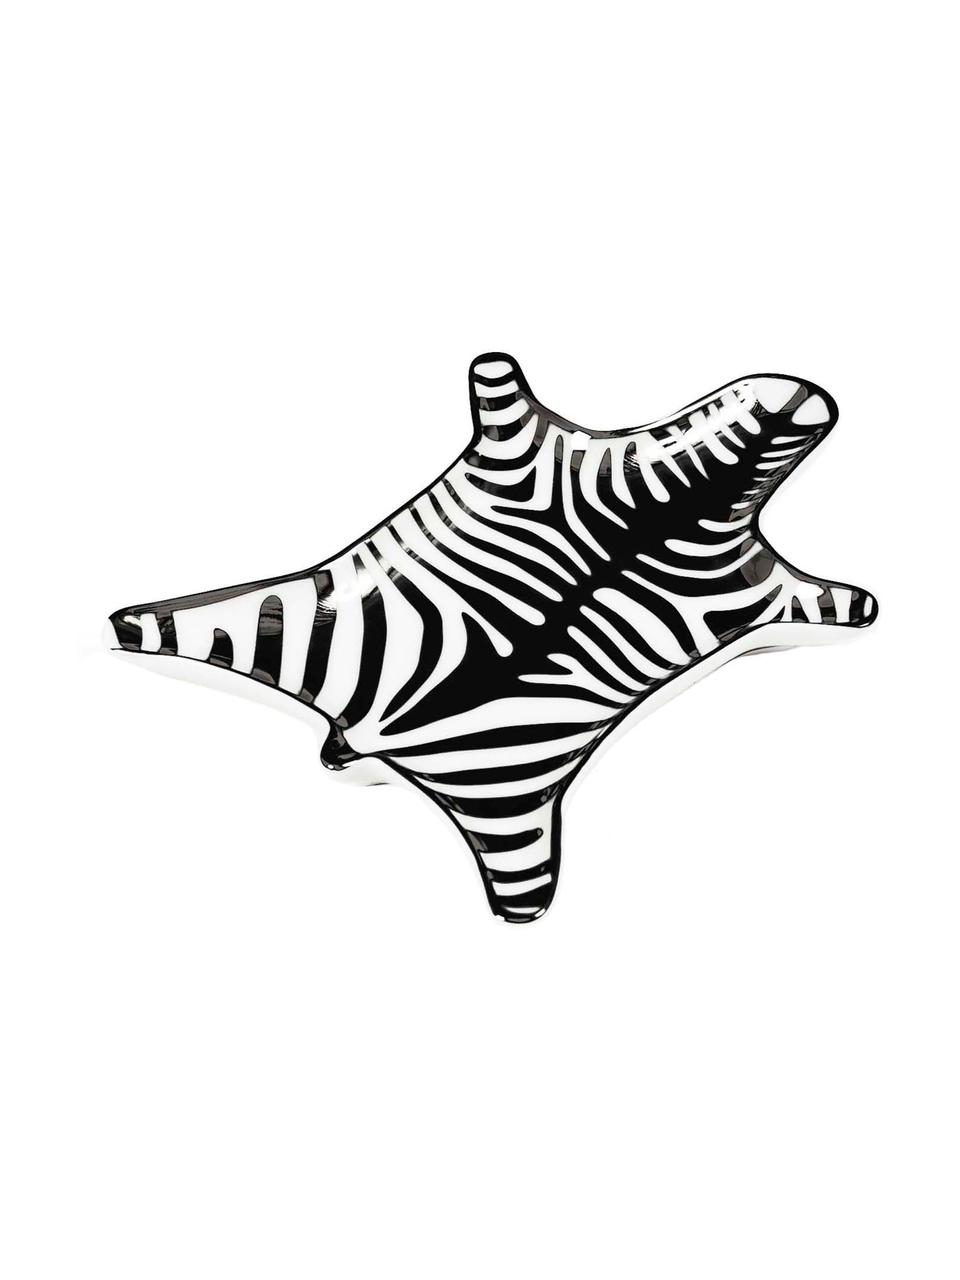 Design decoratieve schaal Zebra van porselein, Porselein, Zwart, wit, B 15 x D 11 cm